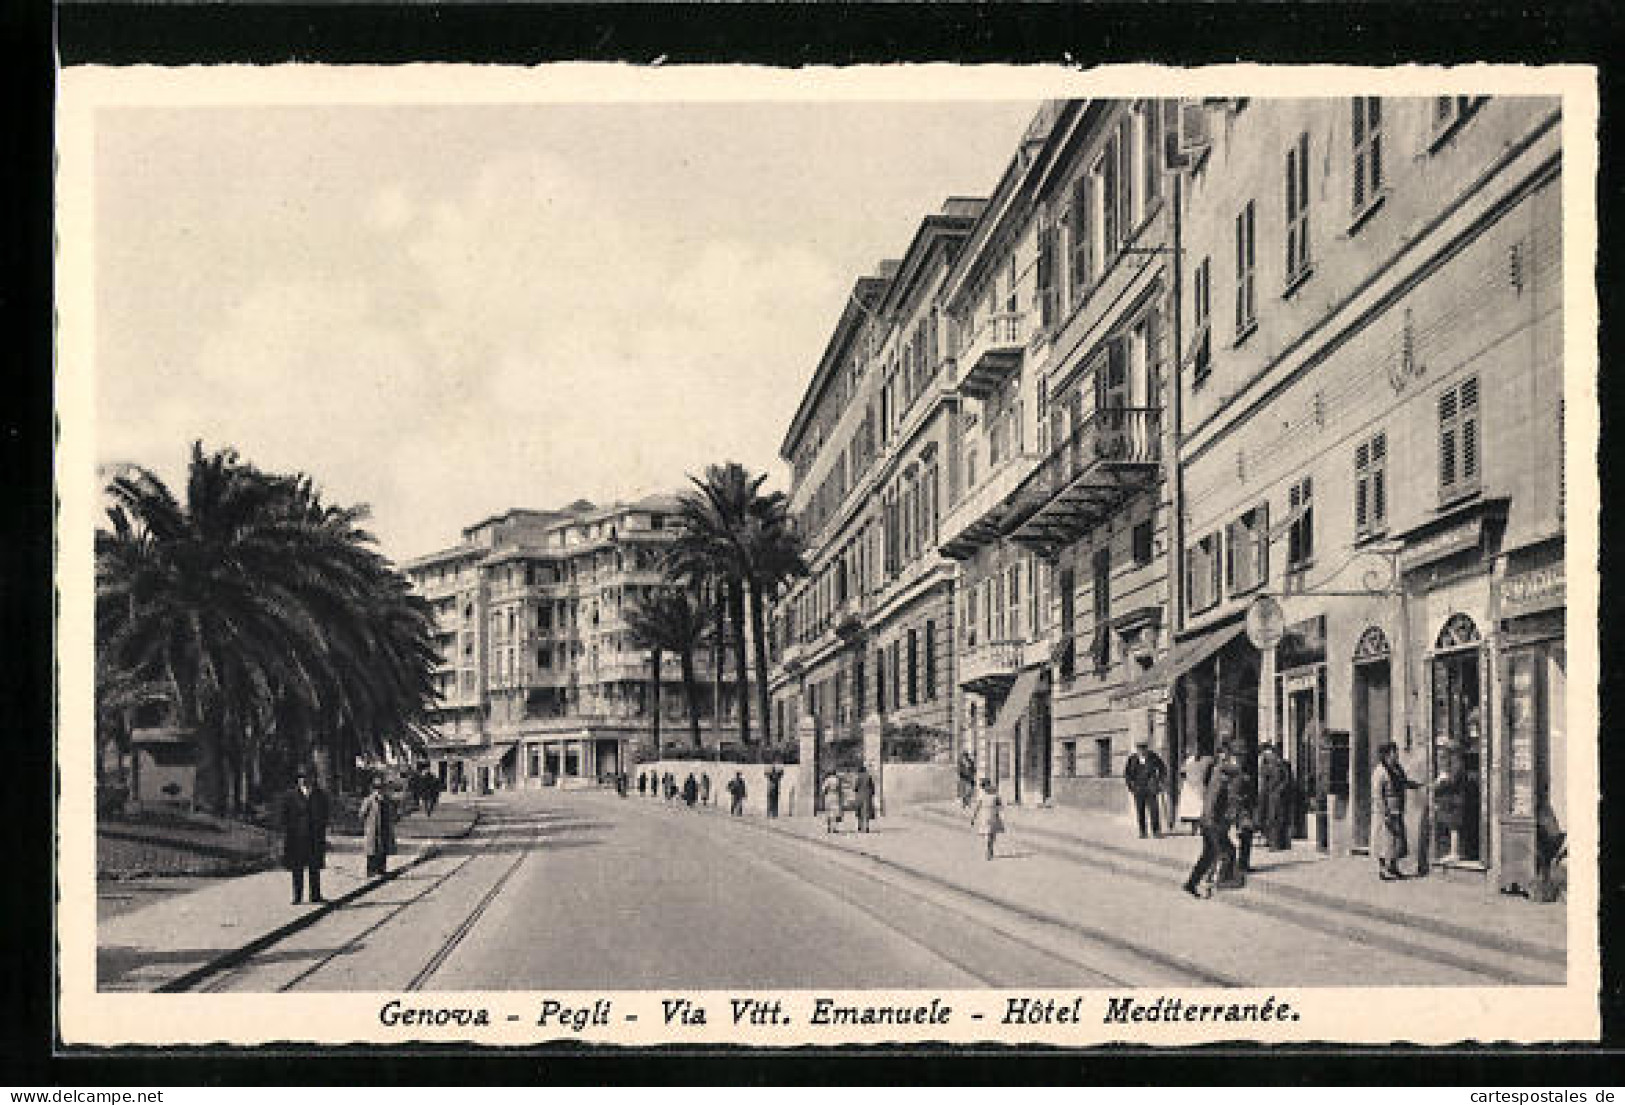 Cartolina Genova, Pegli, Via Vitt. Emanuele, Hotel Mediterranee  - Genova (Genoa)